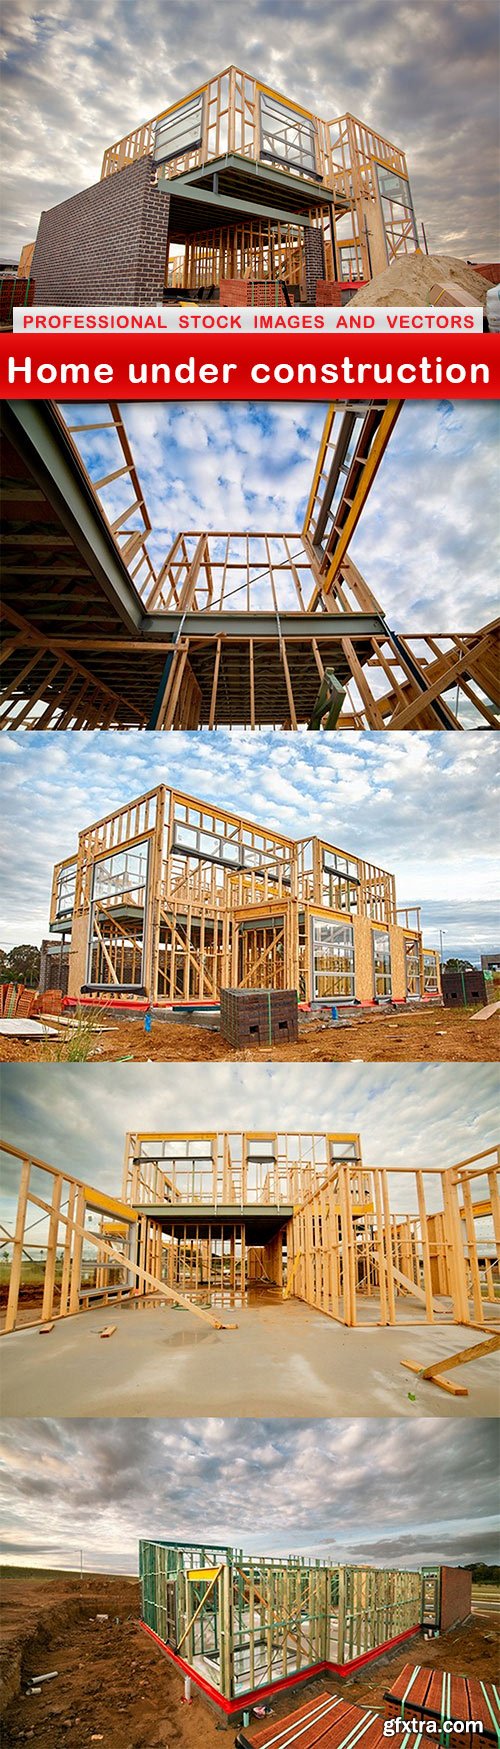 Home under construction - 5 UHQ JPEG